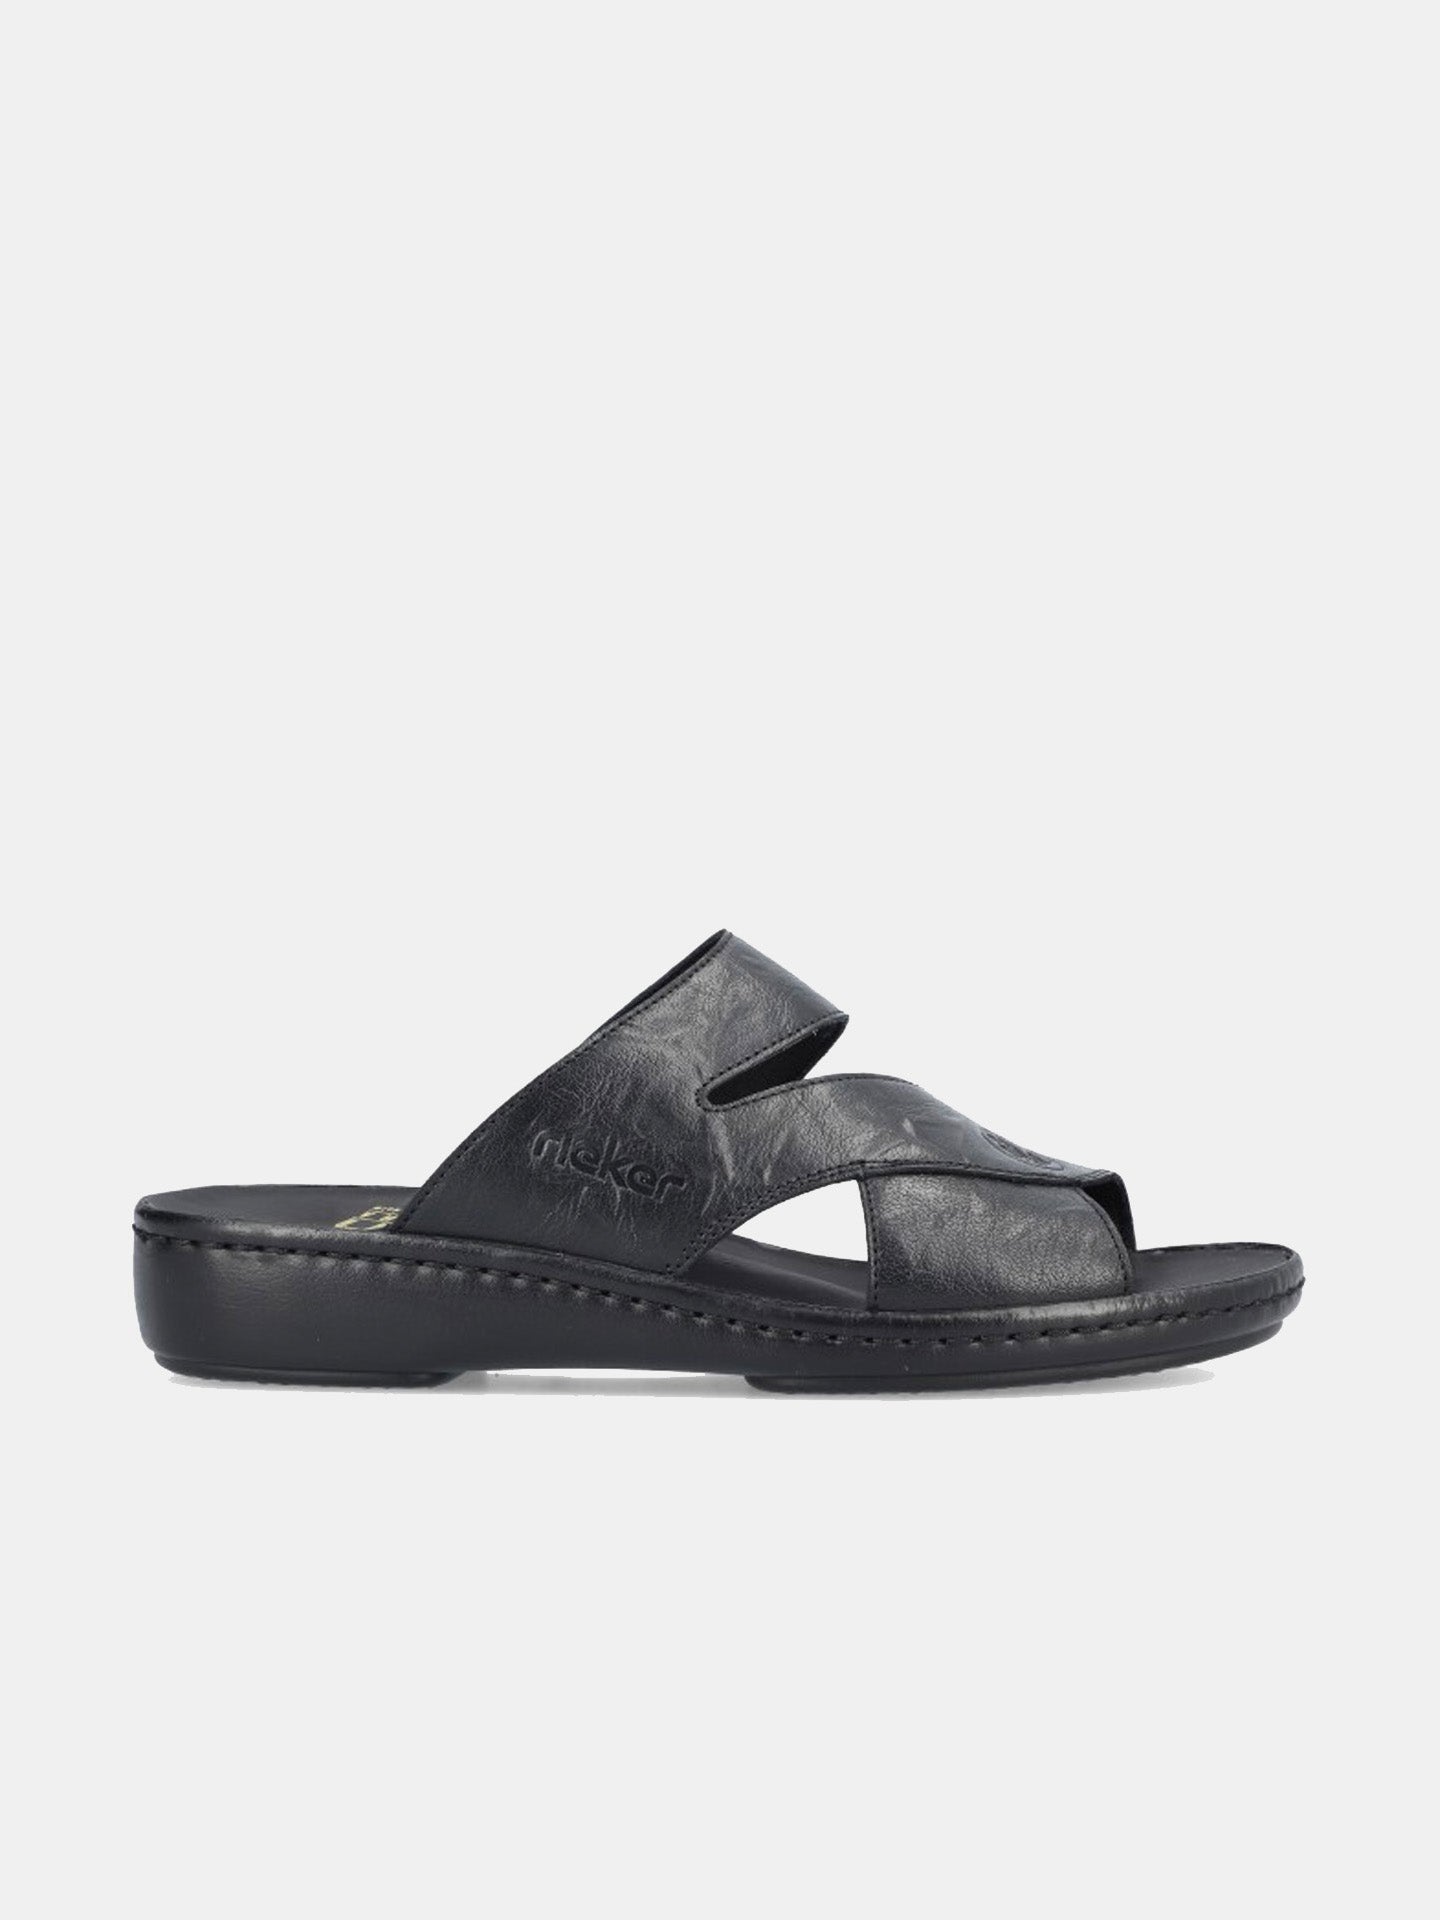 Rieker 23974-02 Men's Slider Sandals